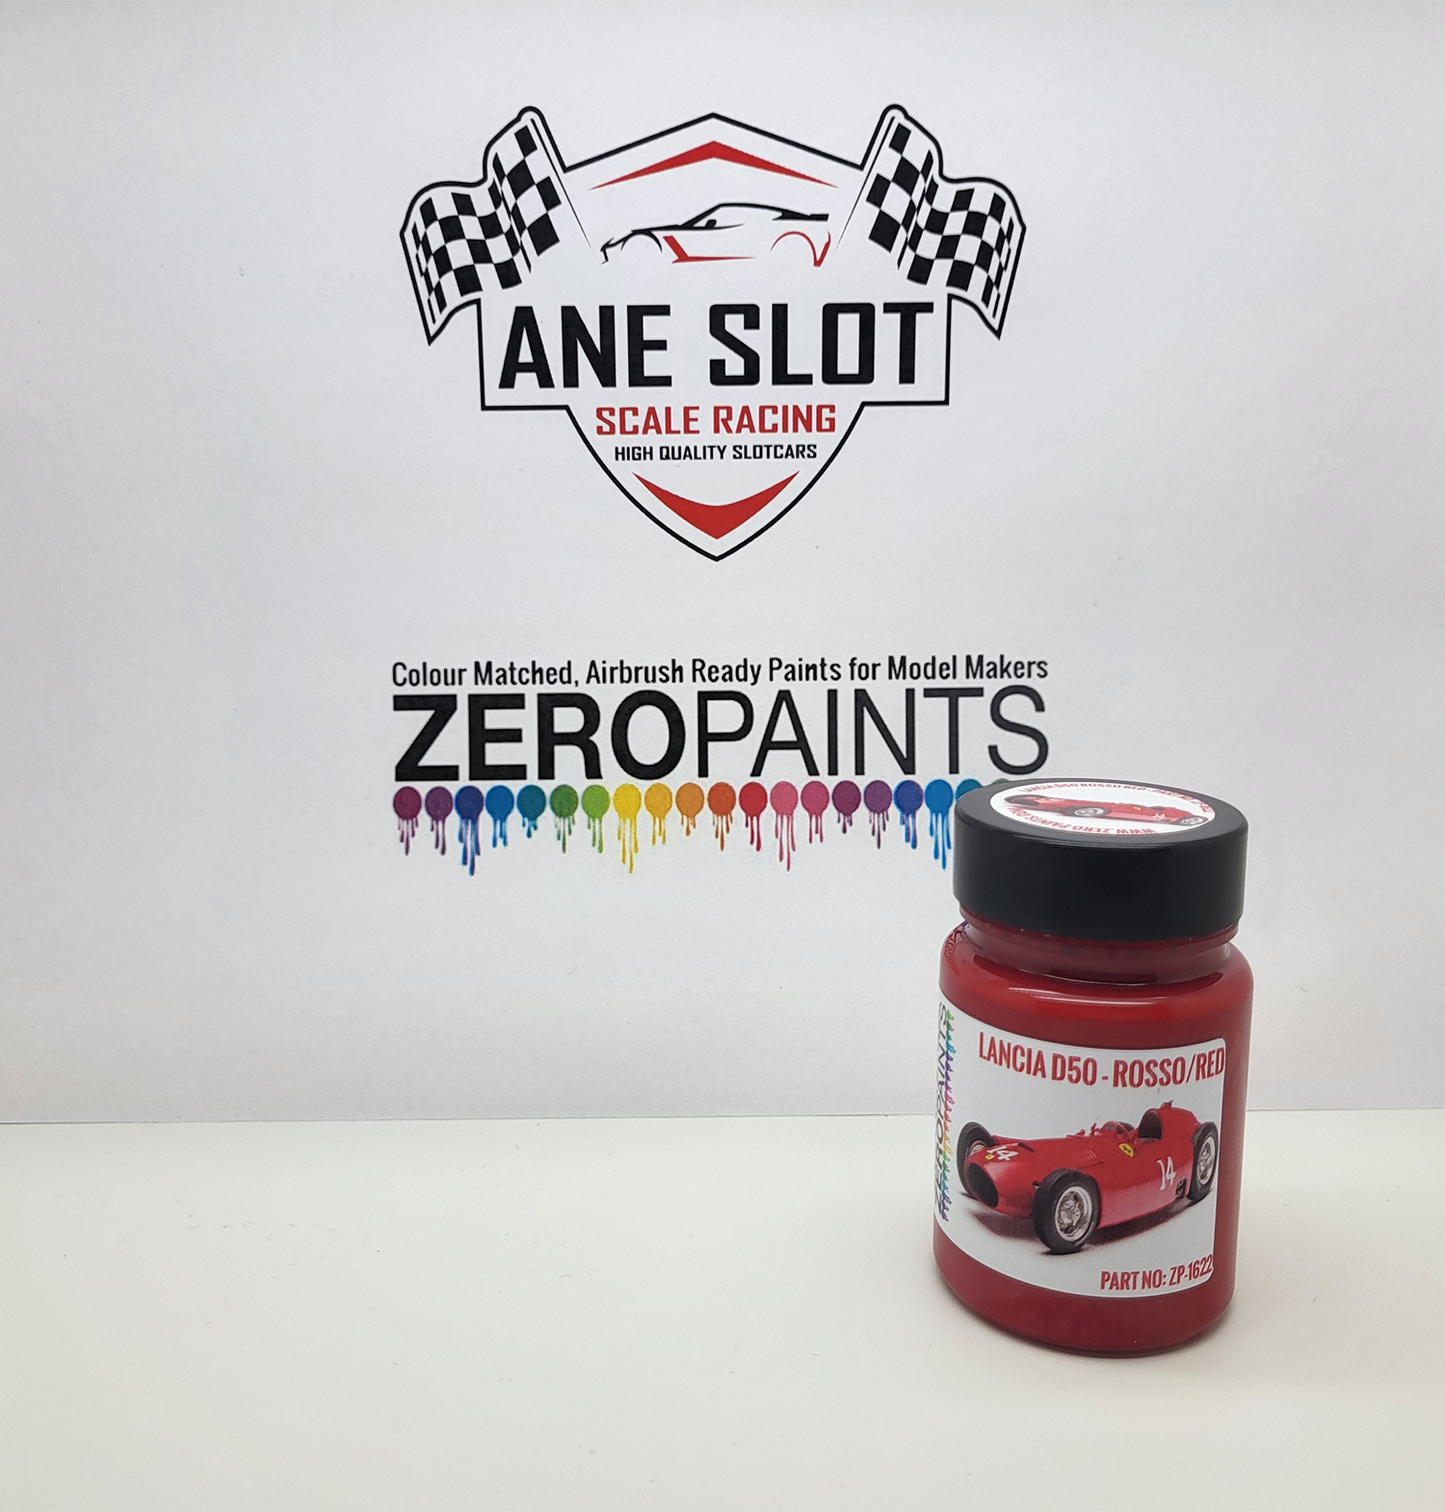 Zeropaints ZP-1622 " Lancia D50 Rosso/Red"